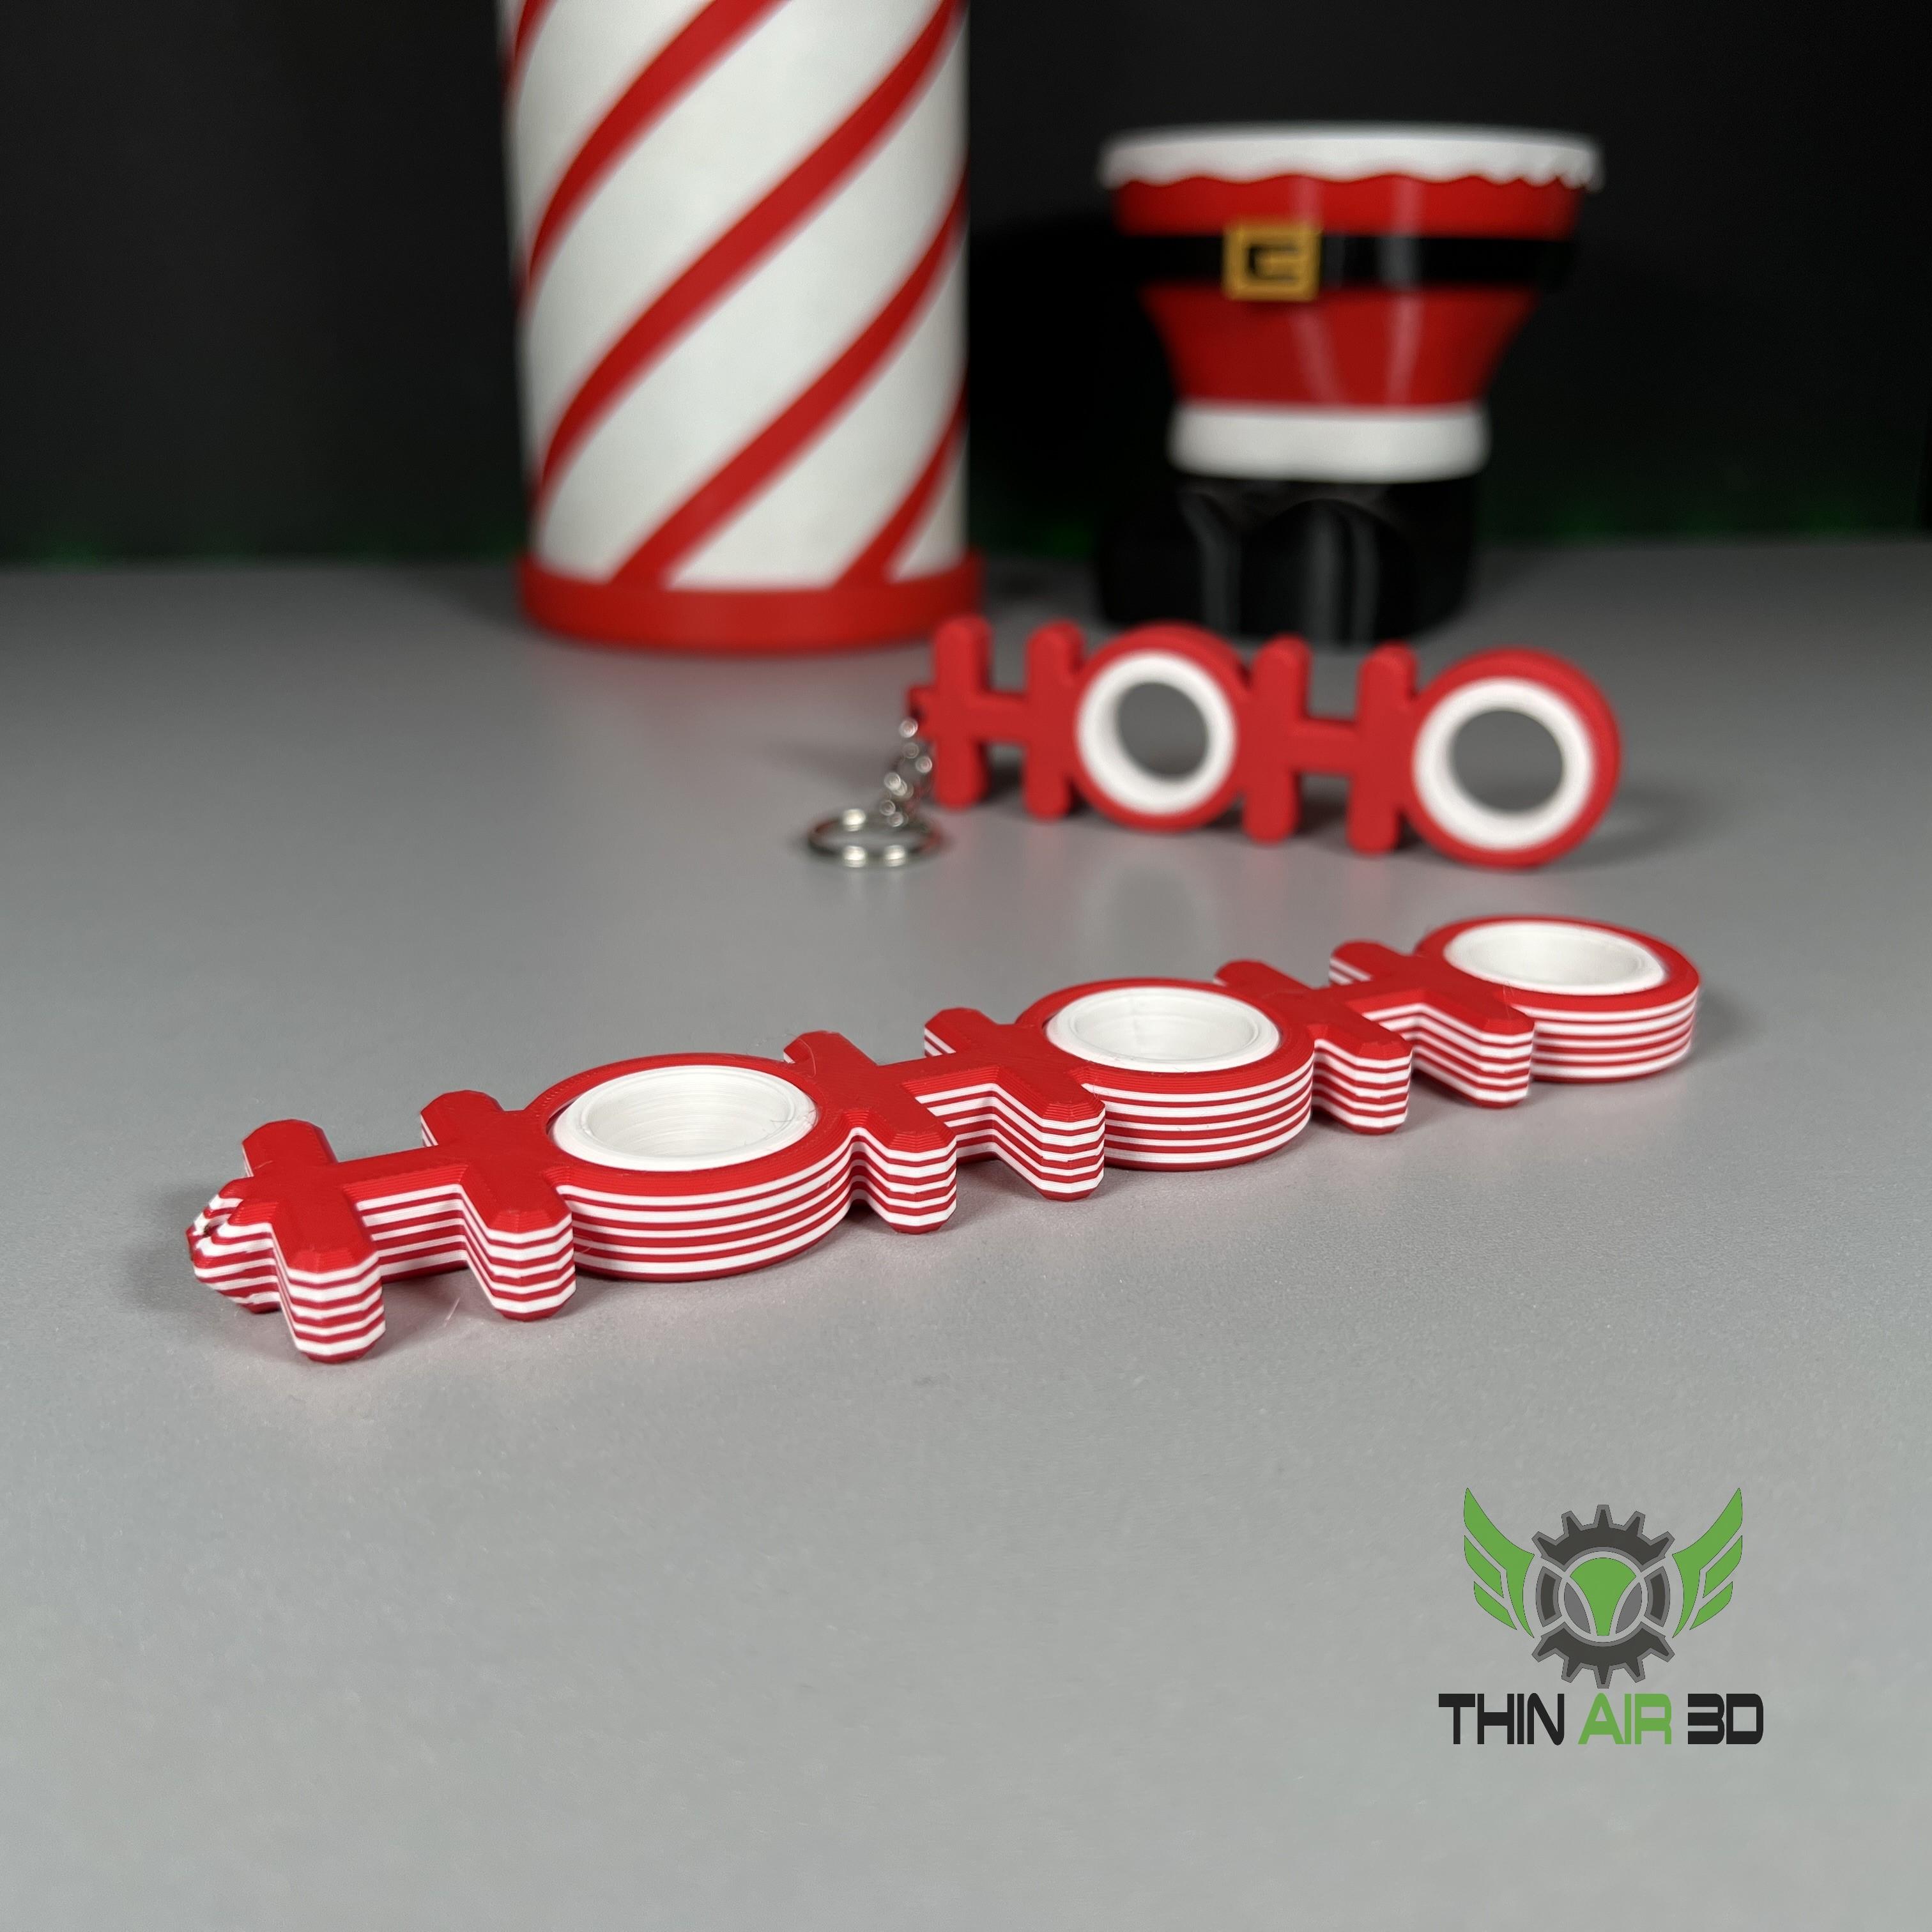 Holiday Spinner Keychain Fidgets - Fidget Spinners 3d model